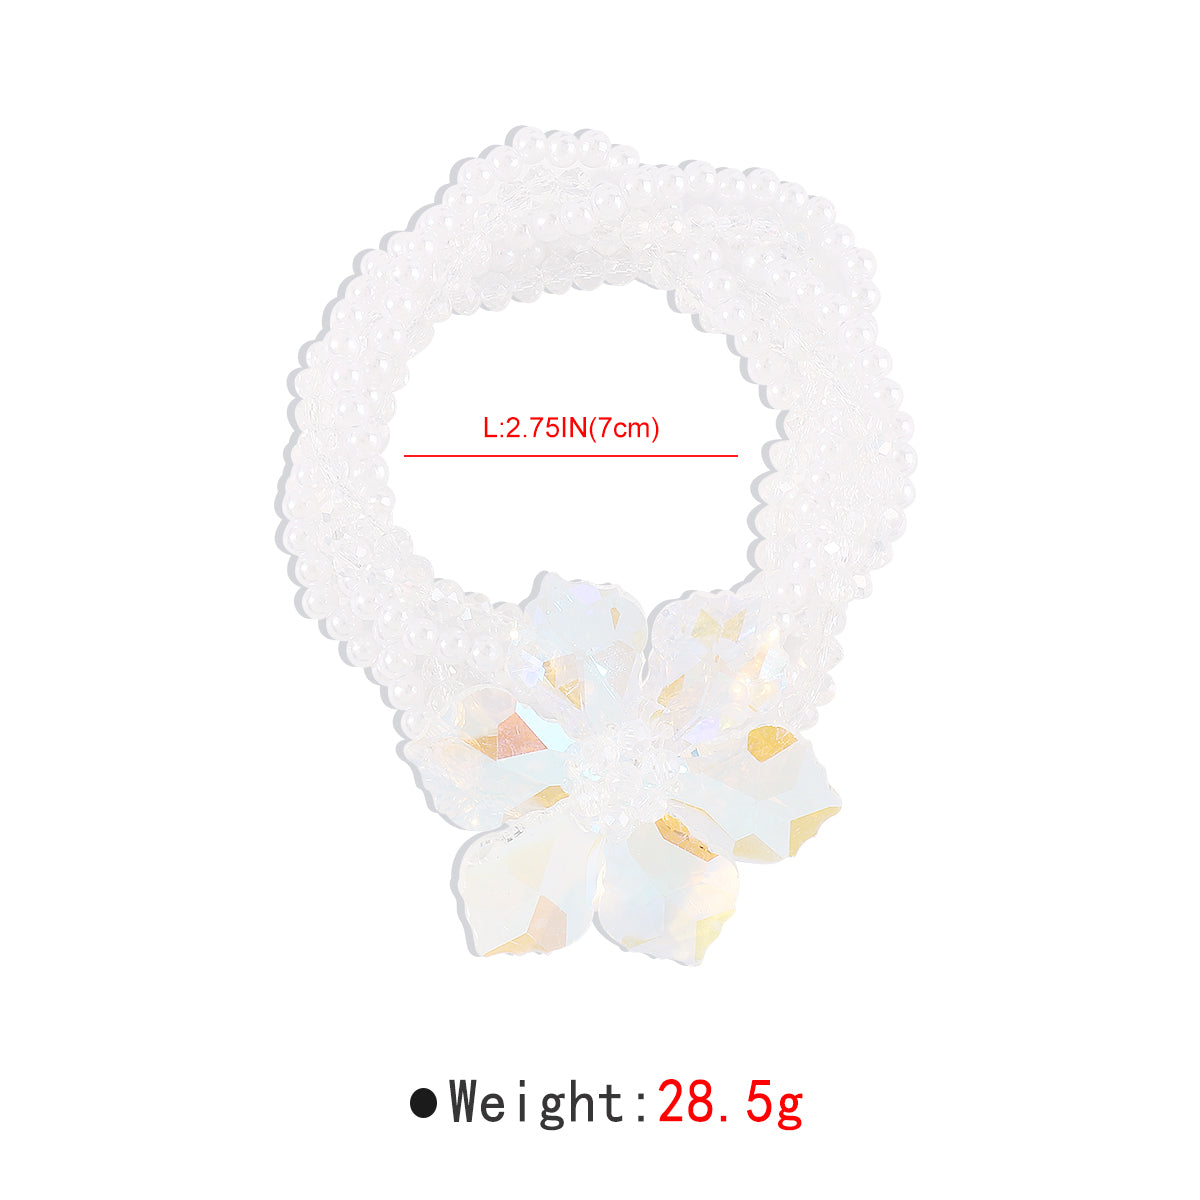 B2127 Translucent Elastic Pearl Hair Tie/Bracelet